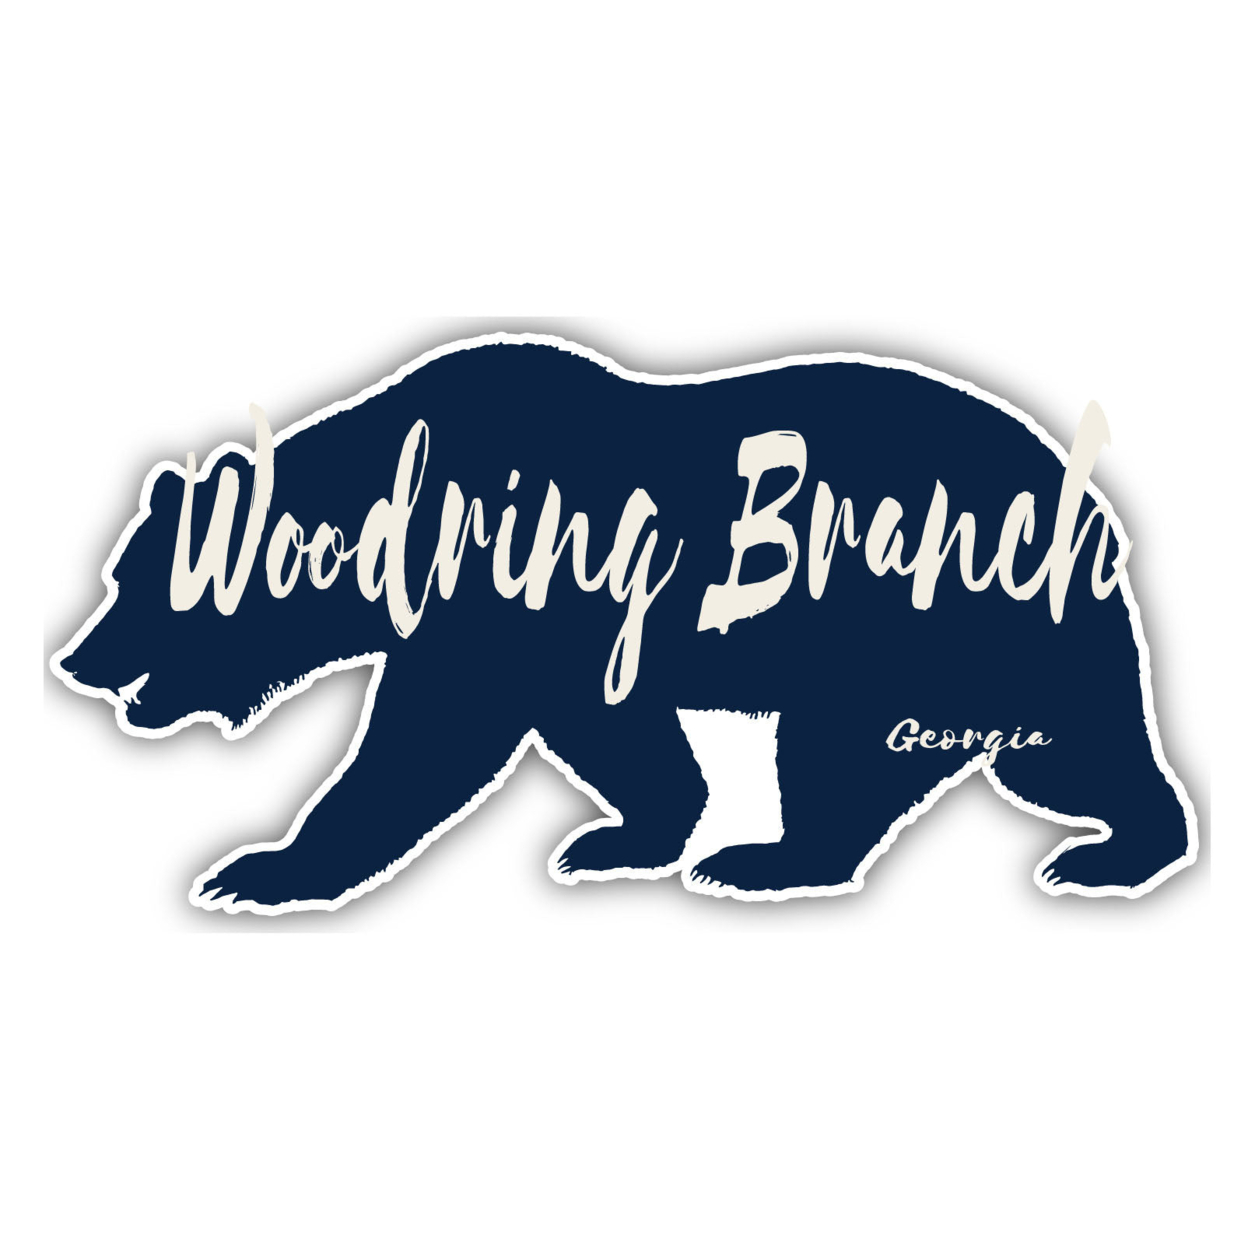 Woodring Branch Georgia Souvenir Decorative Stickers (Choose Theme And Size) - Single Unit, 4-Inch, Bear